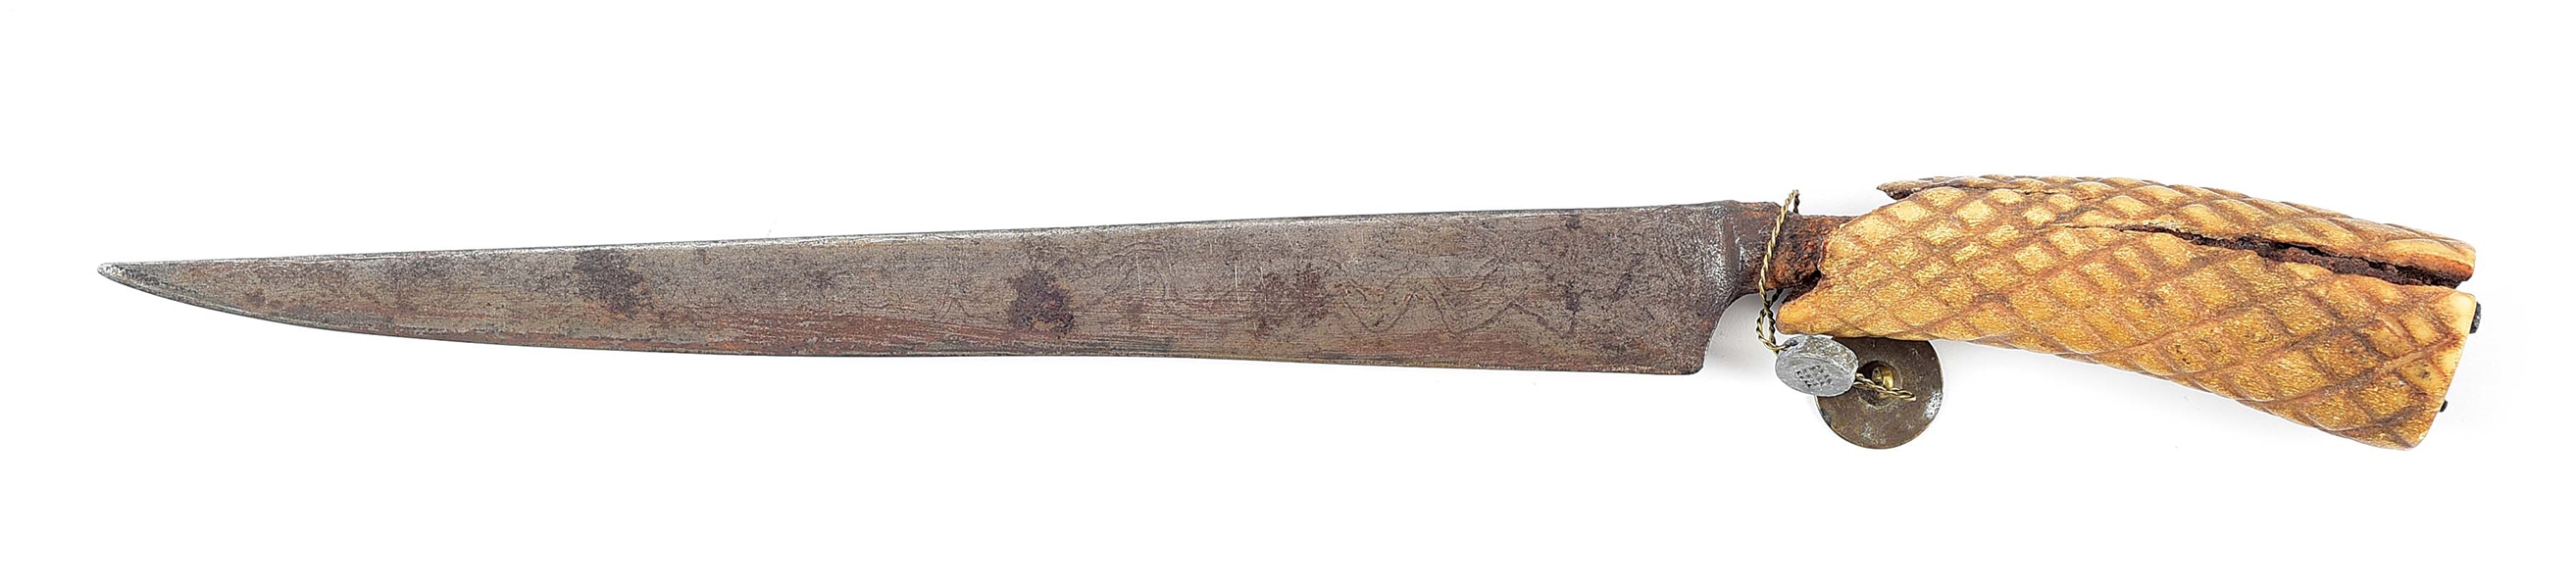 AMERICAN BONE HANDLED BELT KNIFE ATTRIBUTED TO THE BATTLE OF SARATOGA.